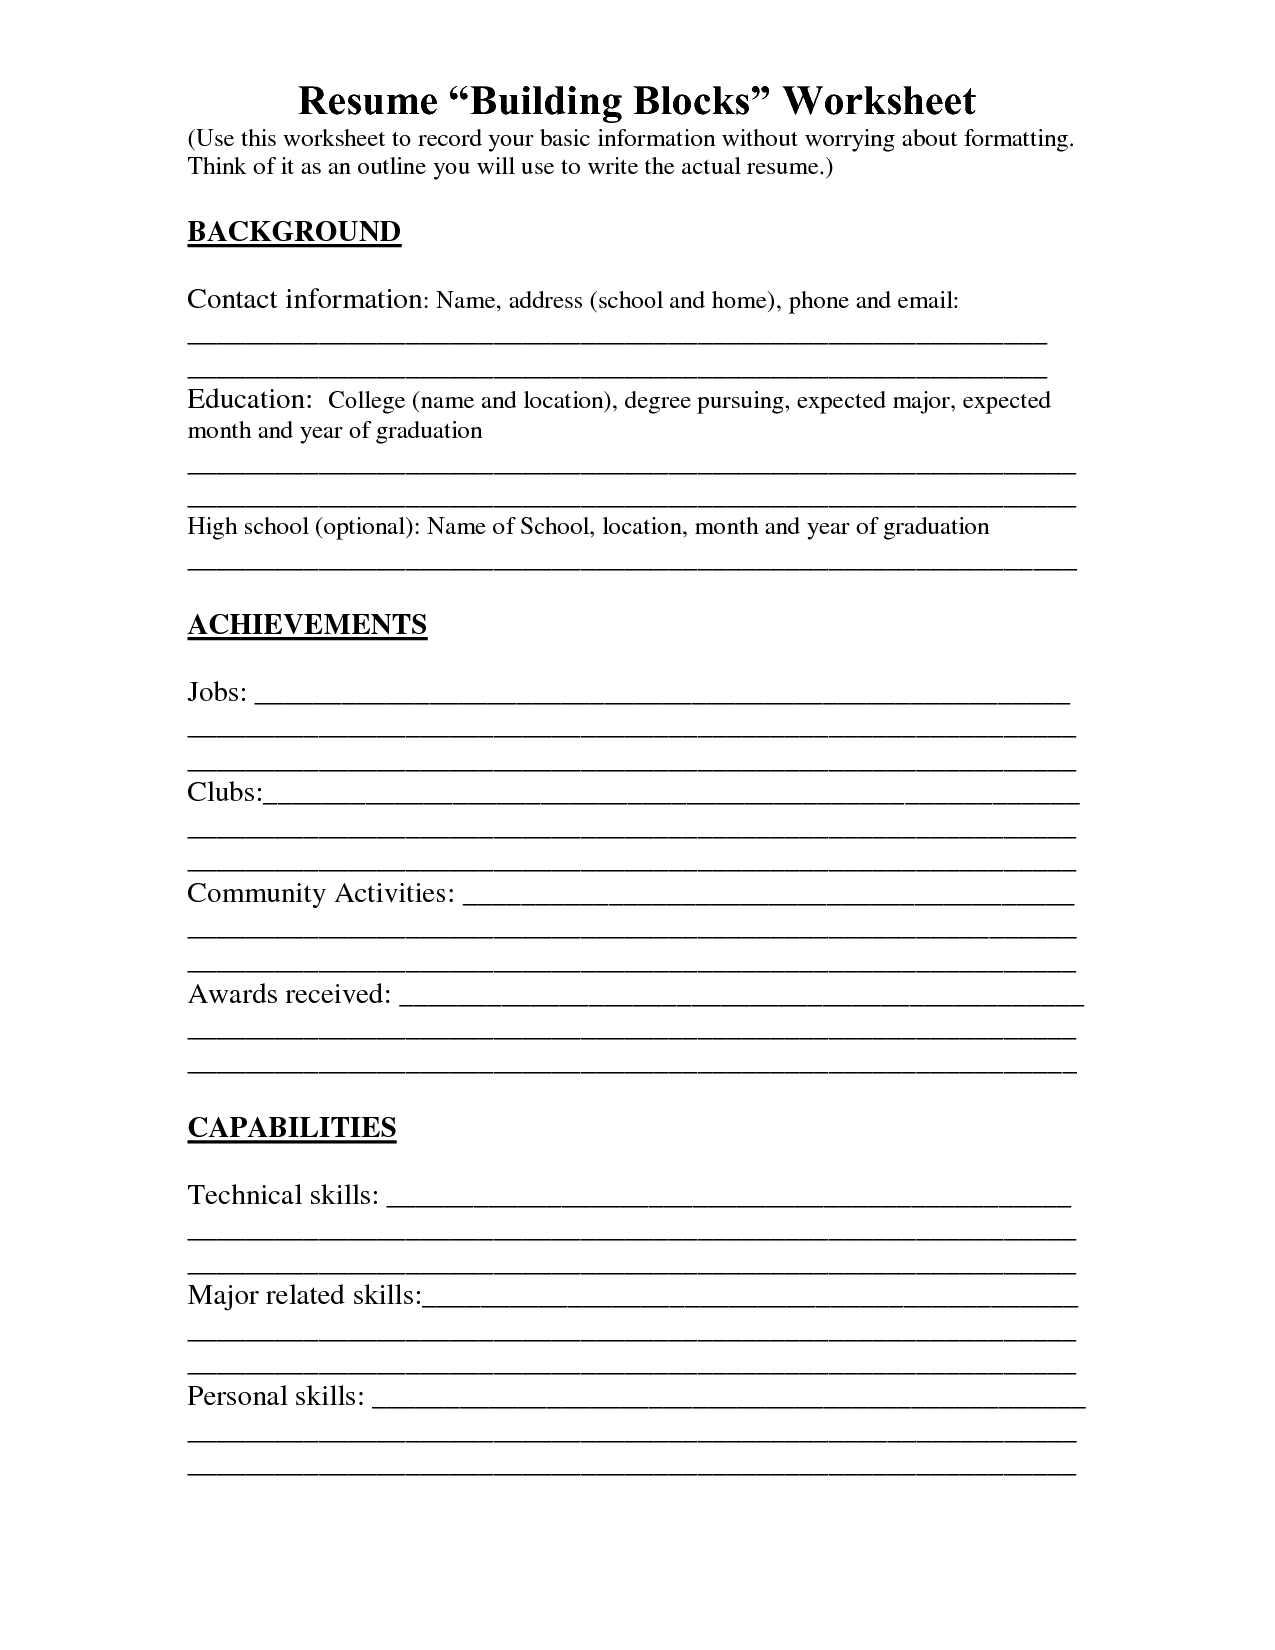 Resume Building Worksheet Image